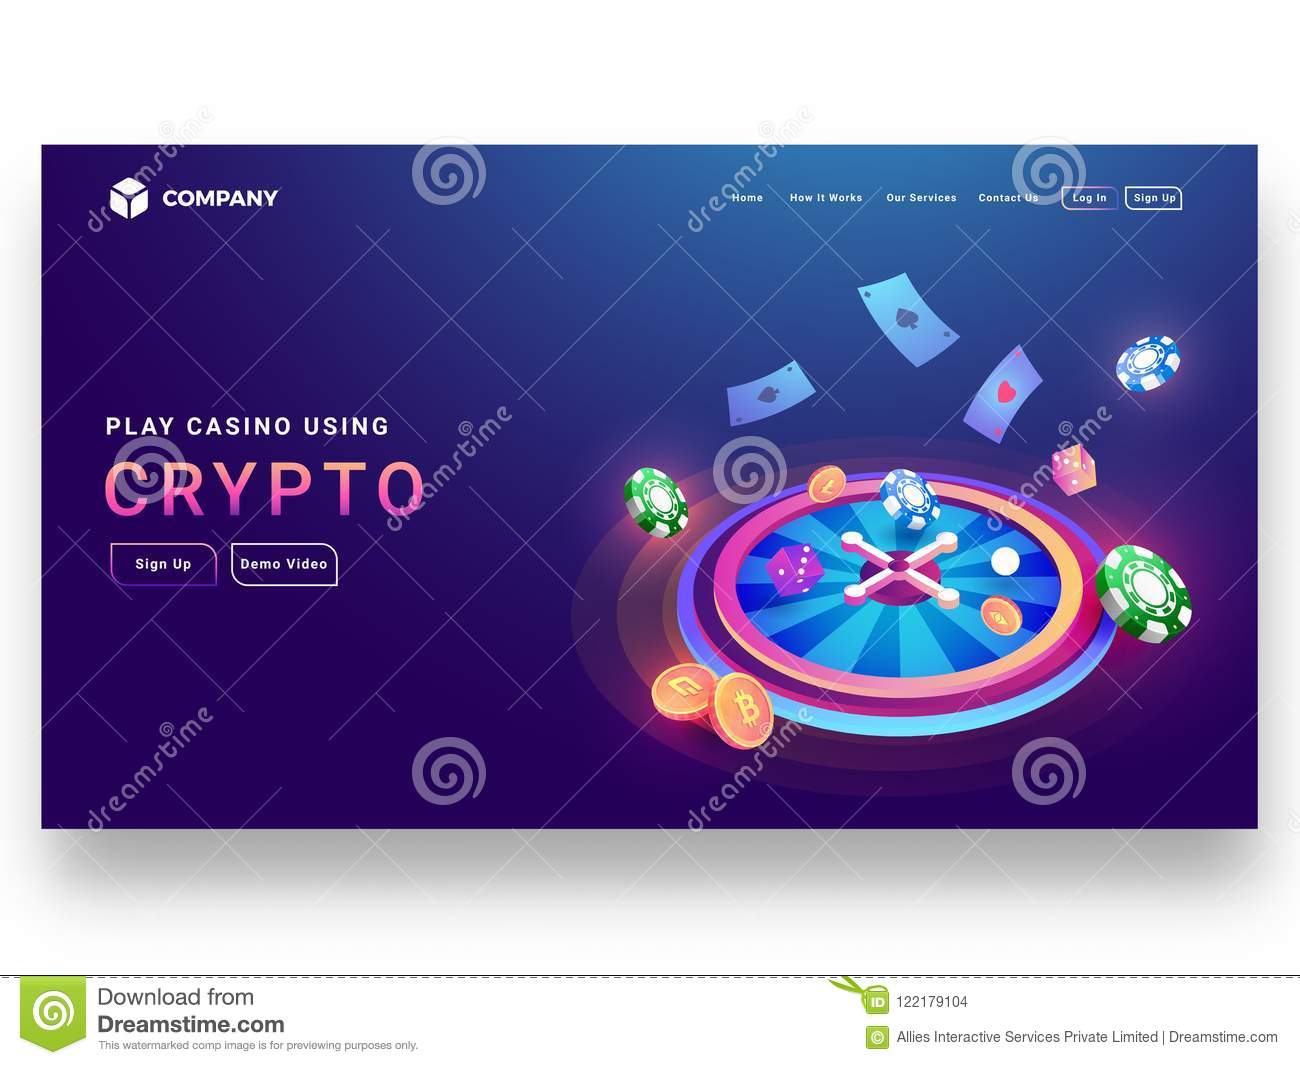 Kajot casino - online slot games home